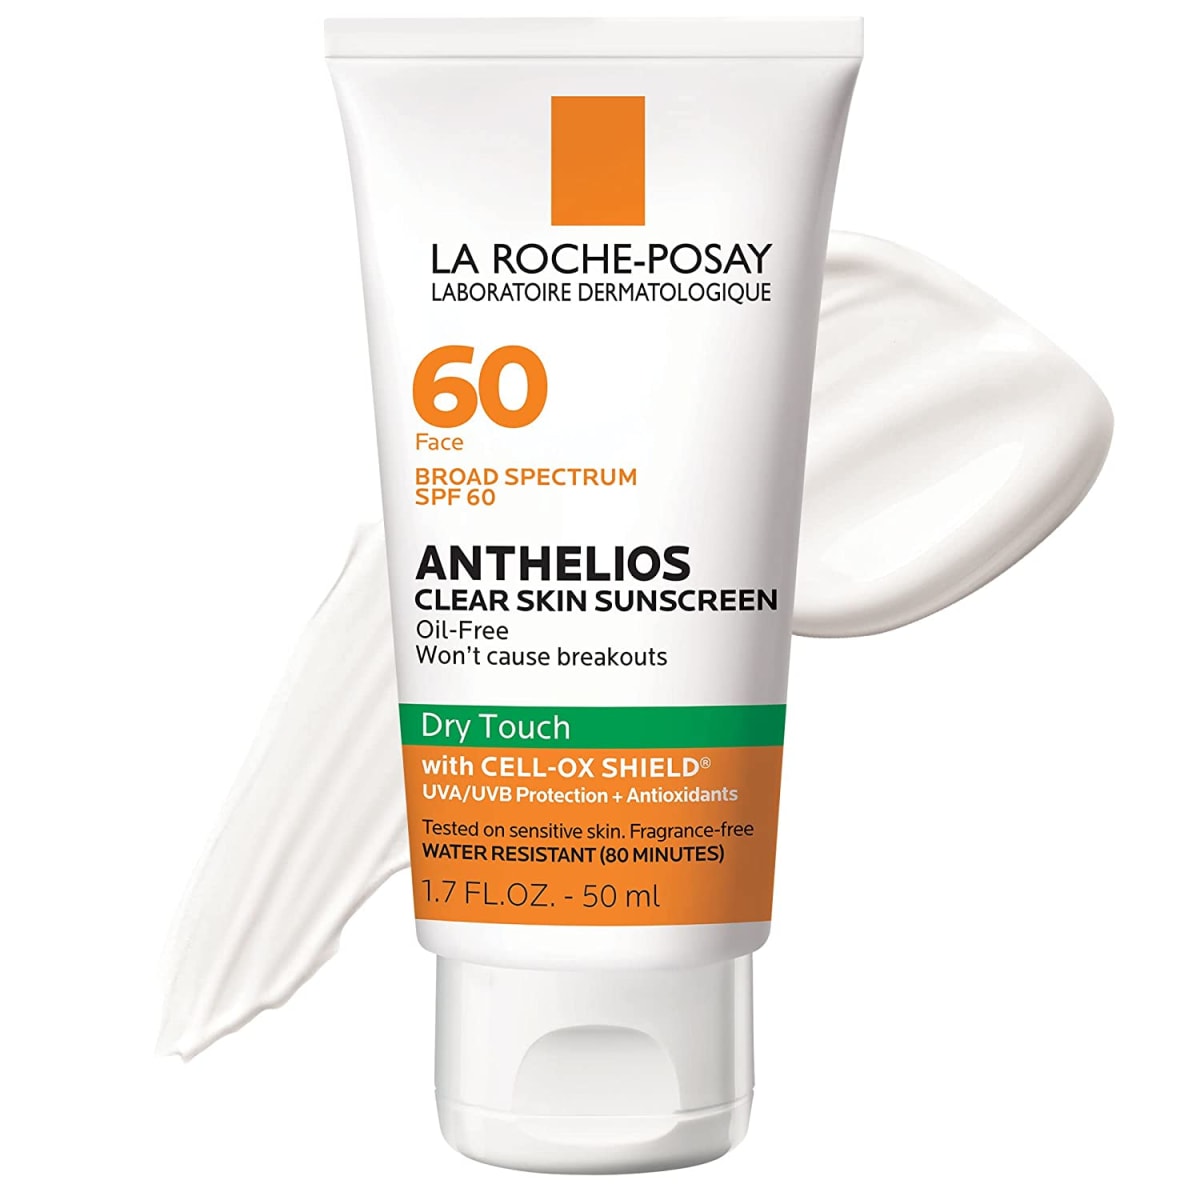 La Roche Posay Anthelos Clear Skin Sunscreen SPF 60